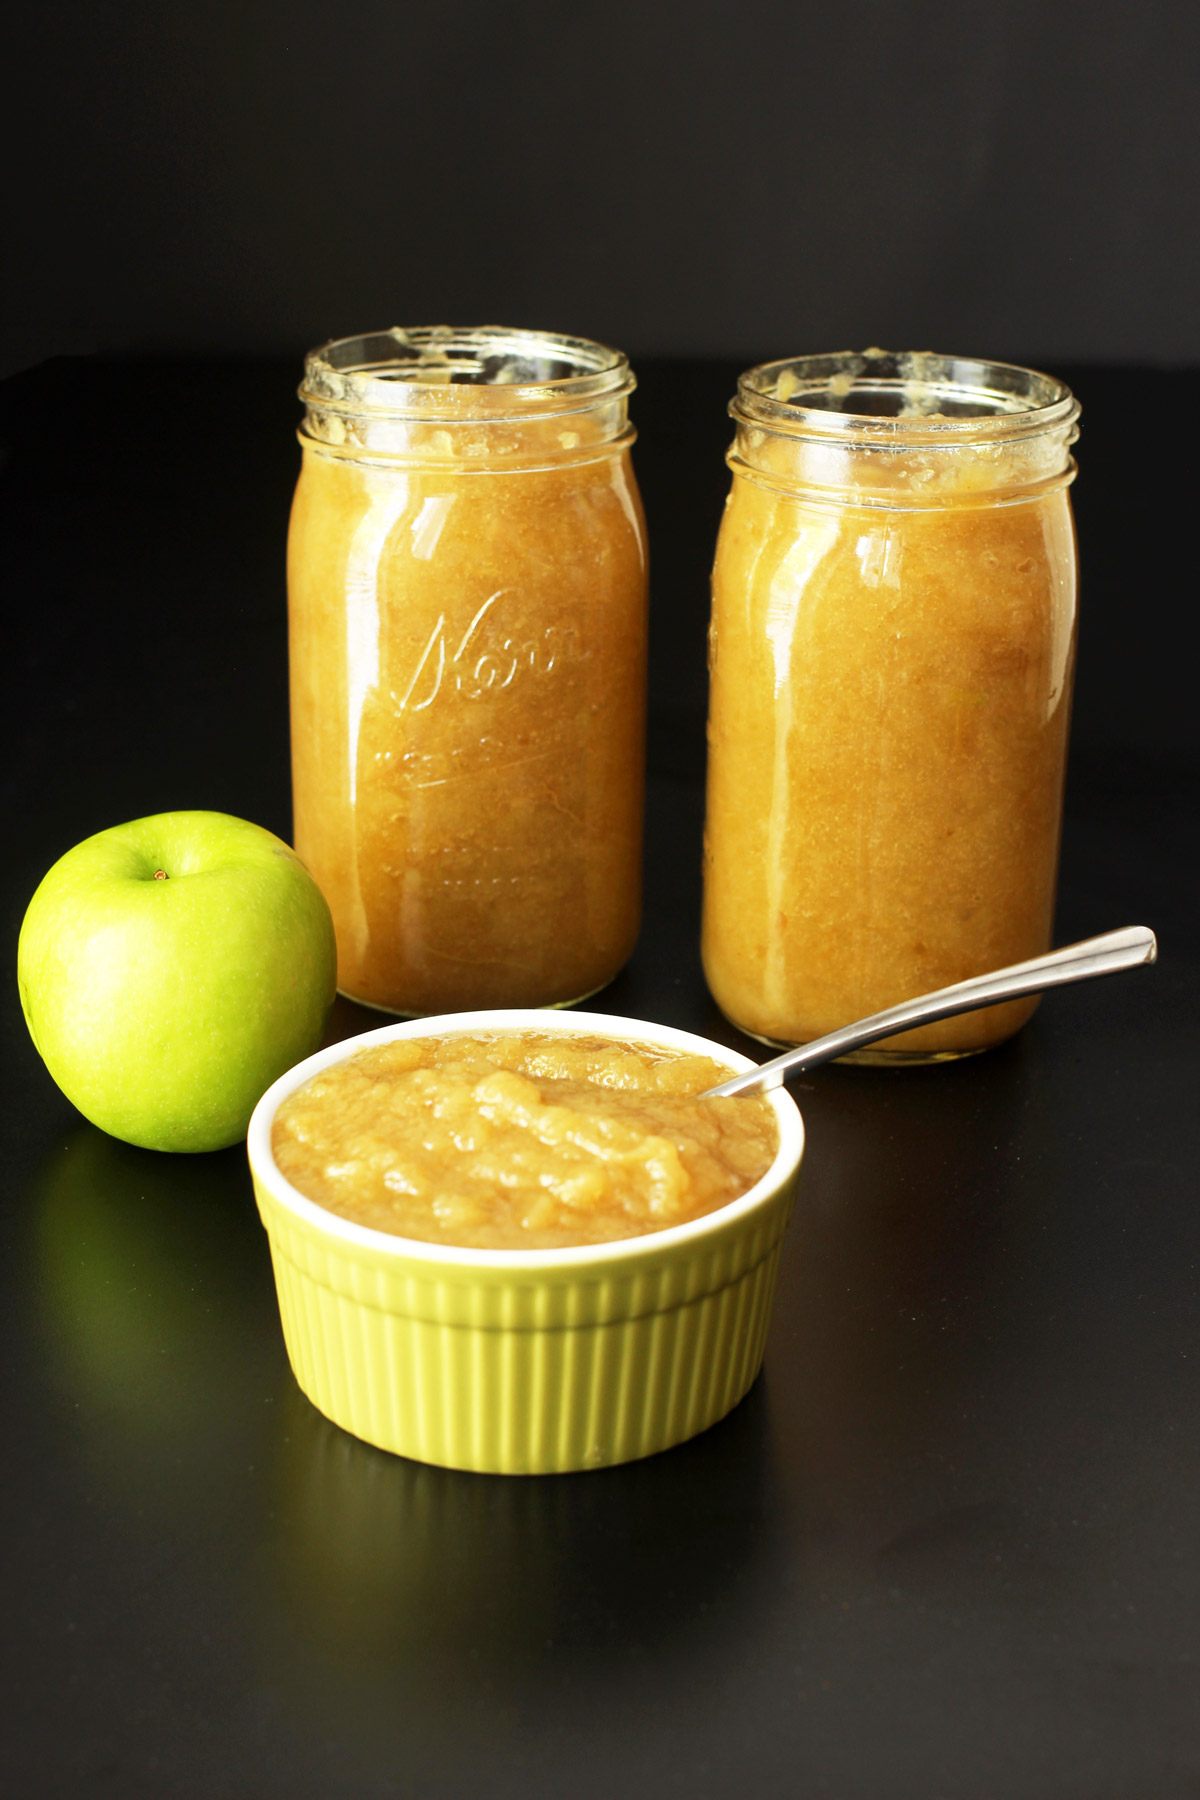 two jars of applesauce next to an apple and a ramekin of sauce.